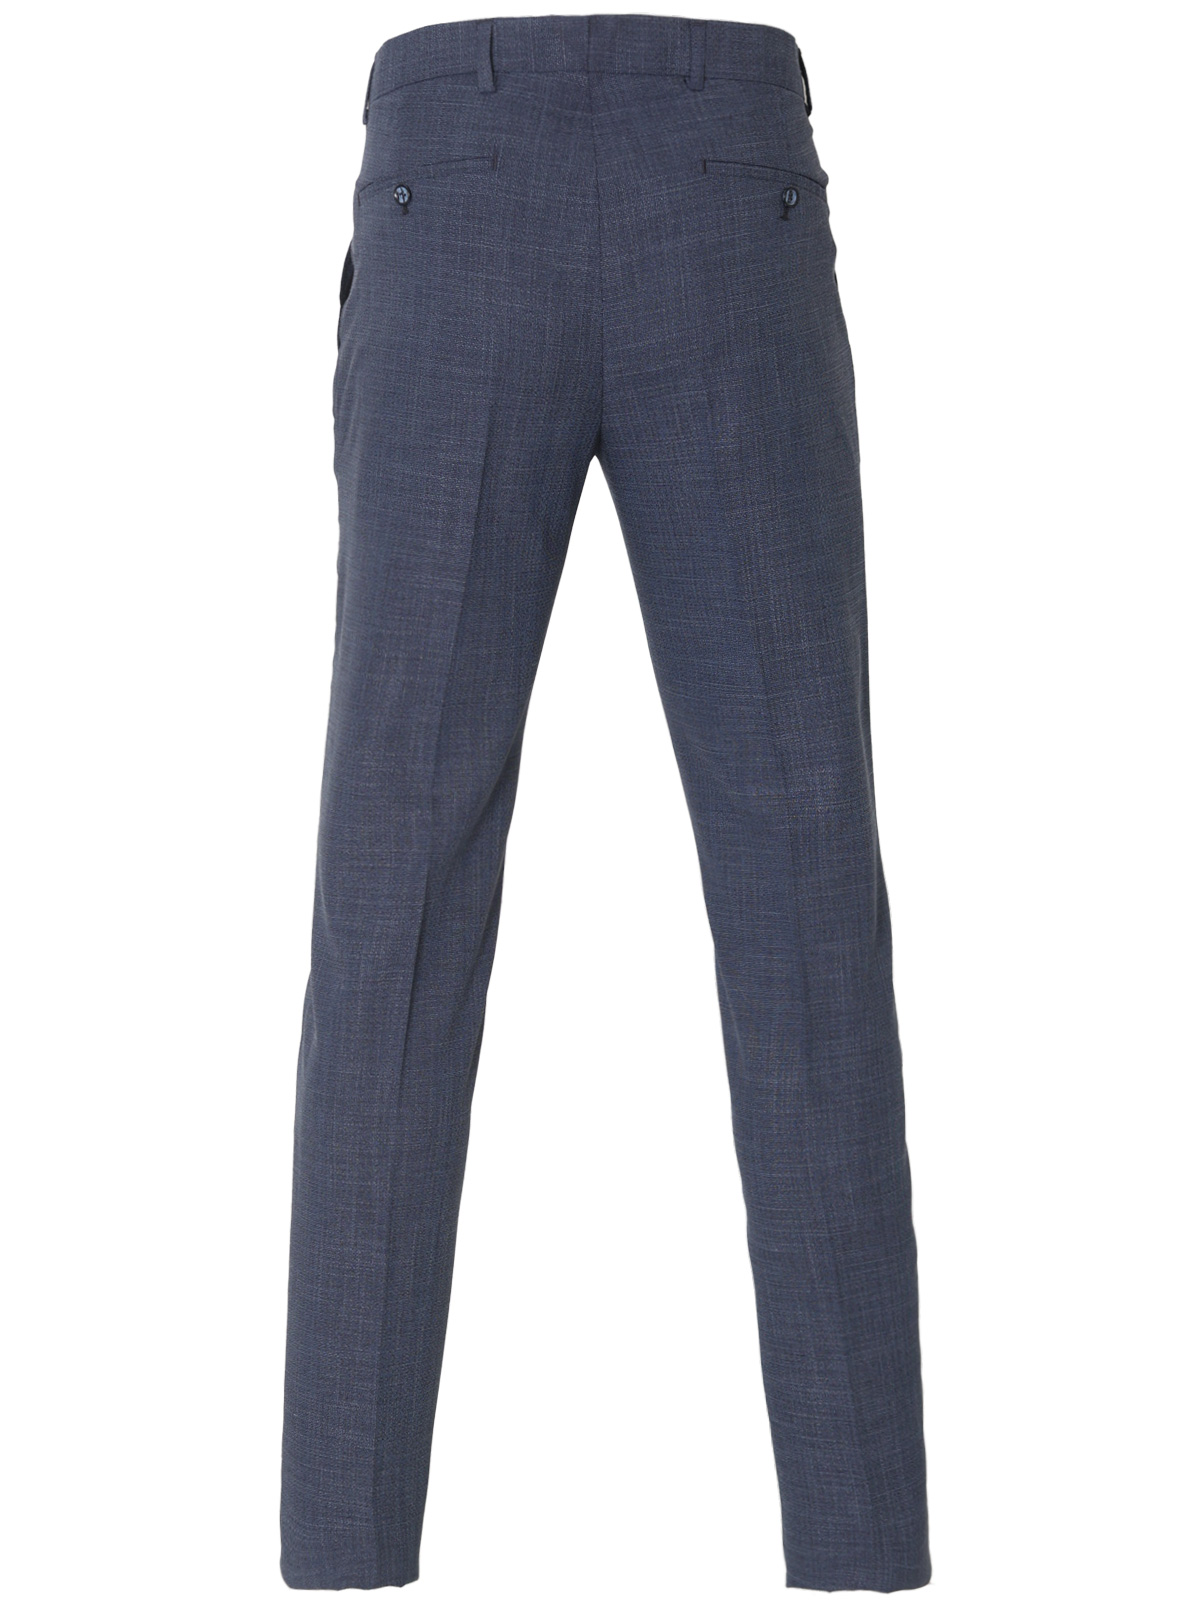 Elegant trousers in blue melange - 63340 € 62.99 img2